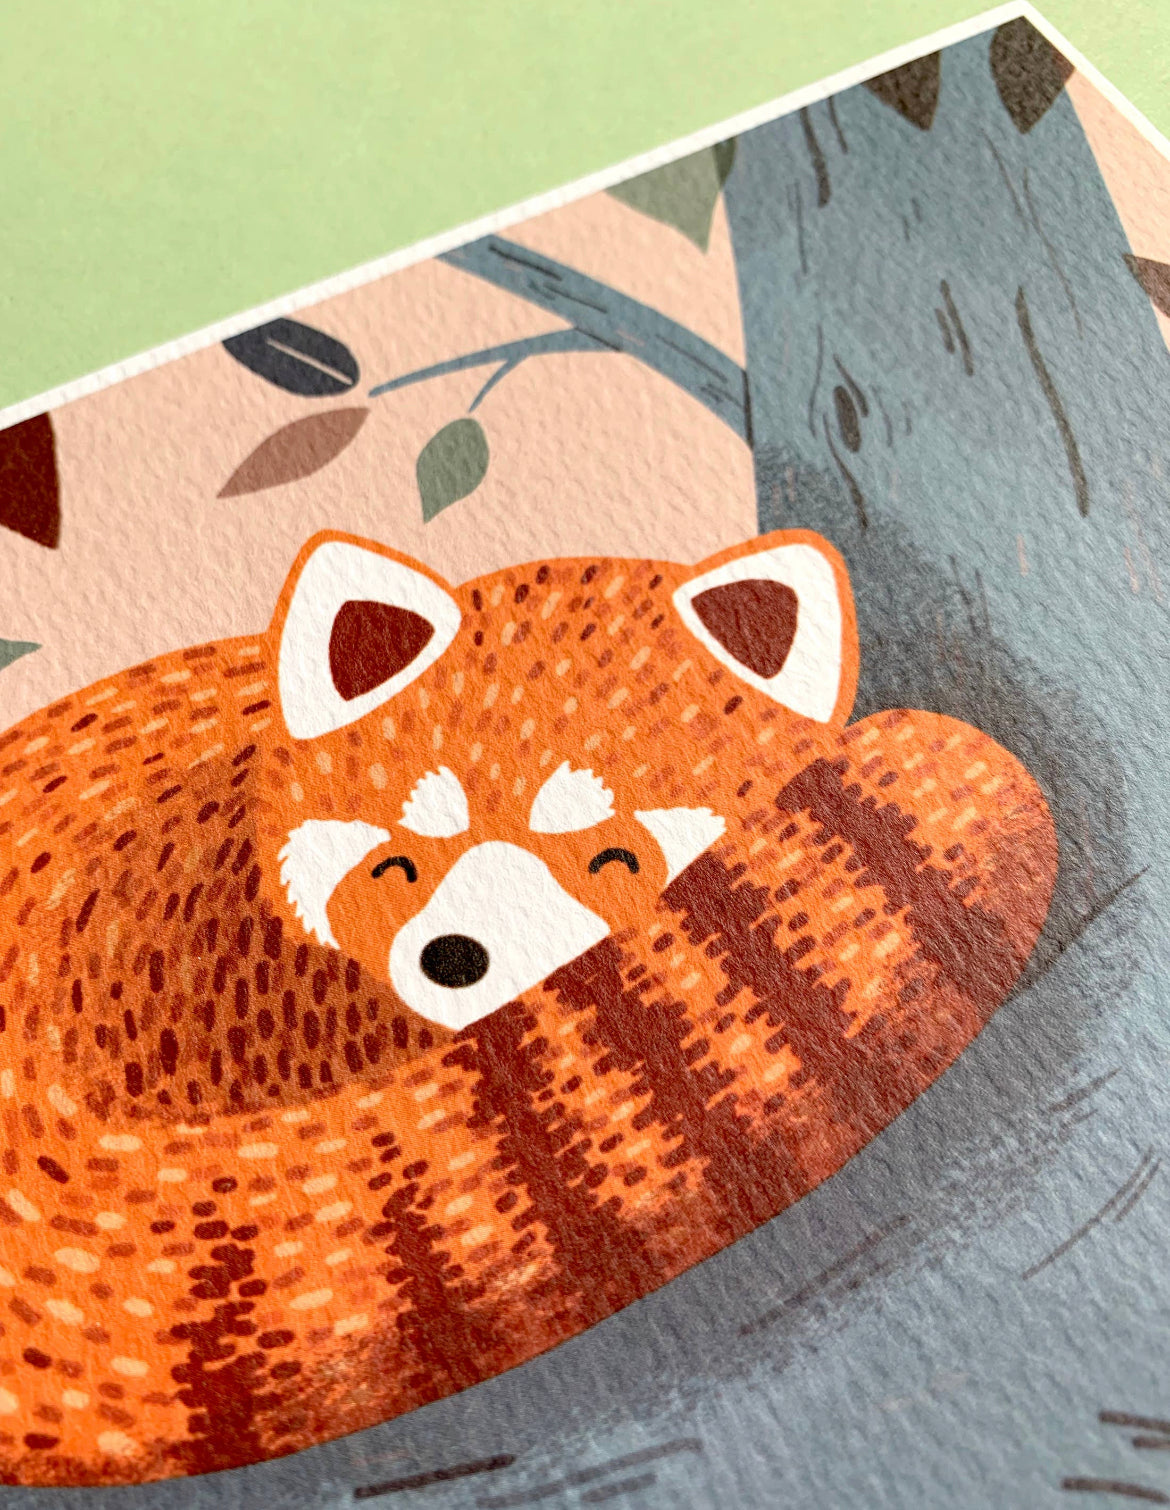 Sleeping Red Panda A5 Print